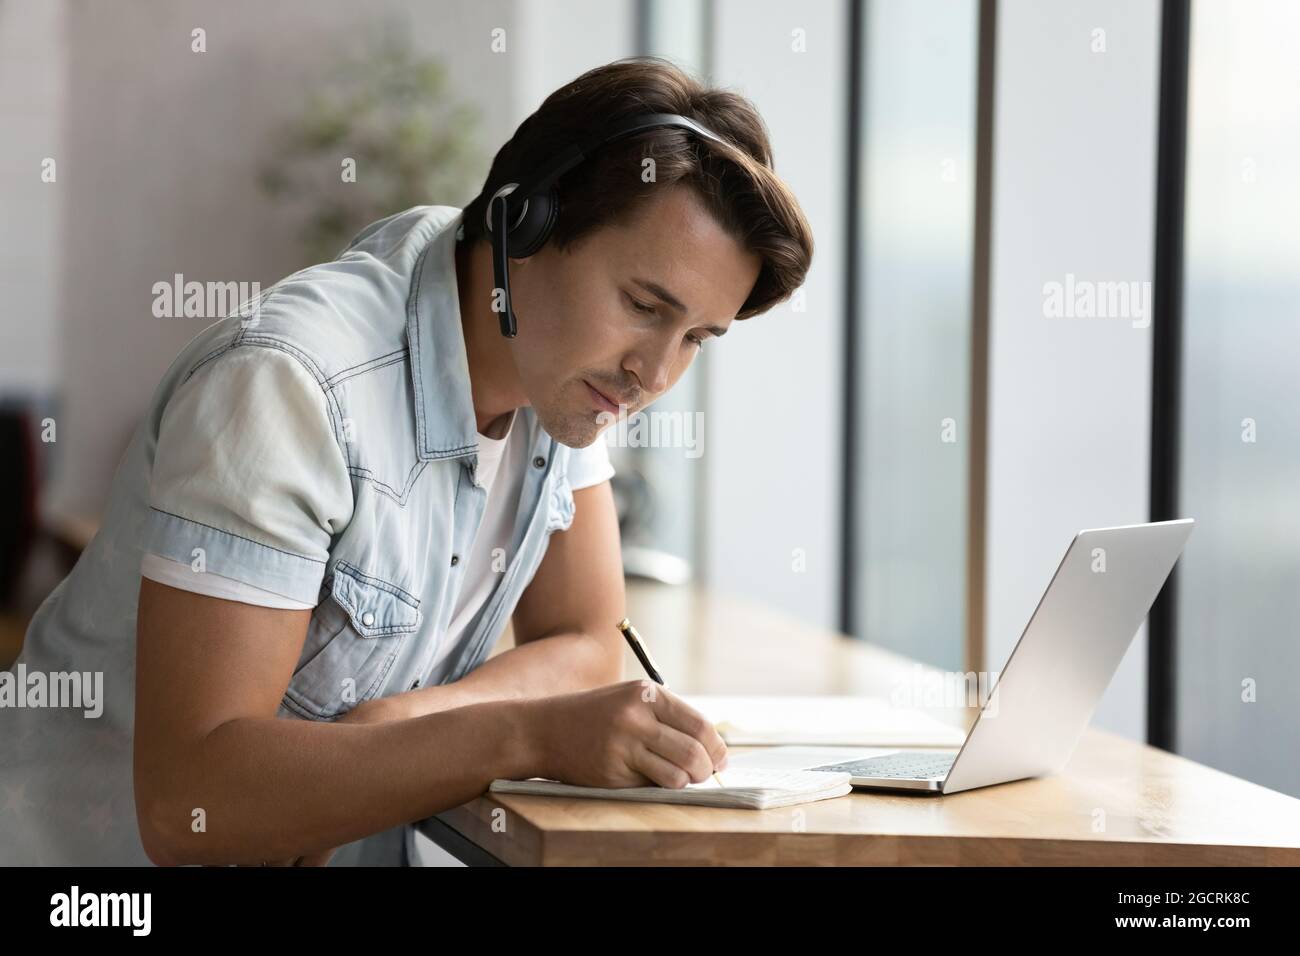 Focused adult student guy wearing headphones attending virtual class Stock Photo